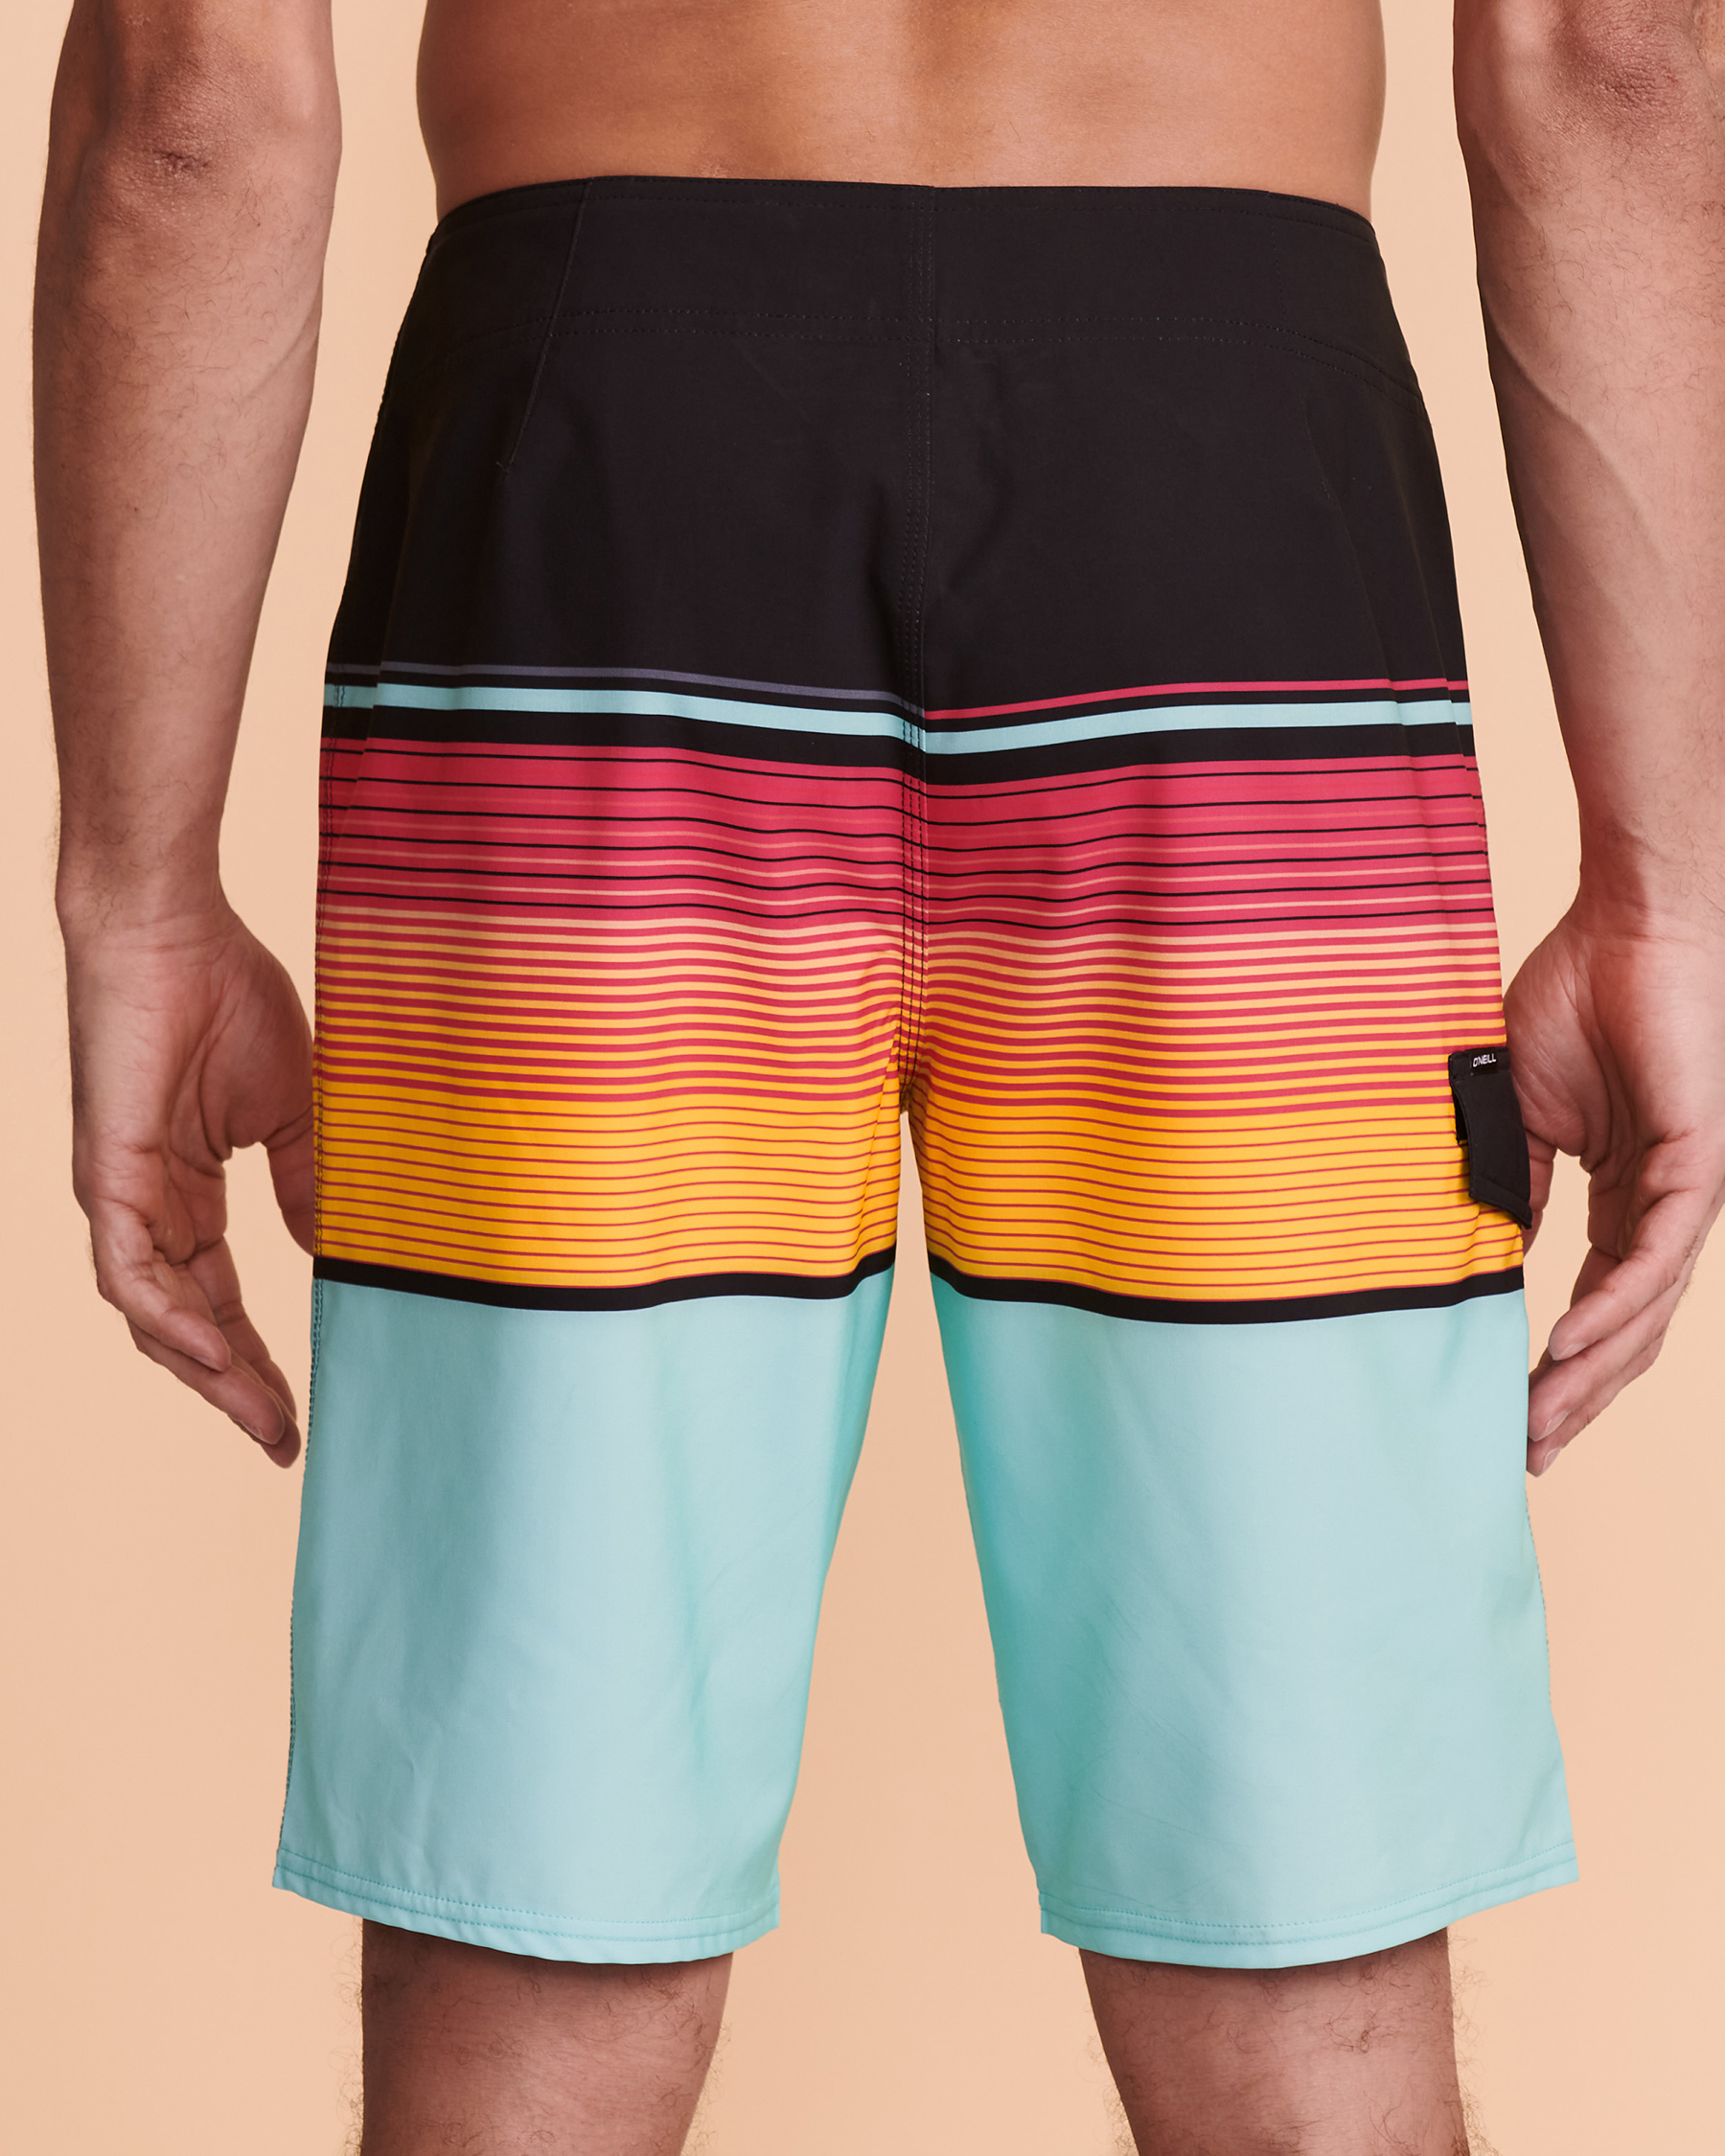 O'NEILL LENNOX STRETCH Boardshort Swimsuit Multi stripes SP2106011 - View3